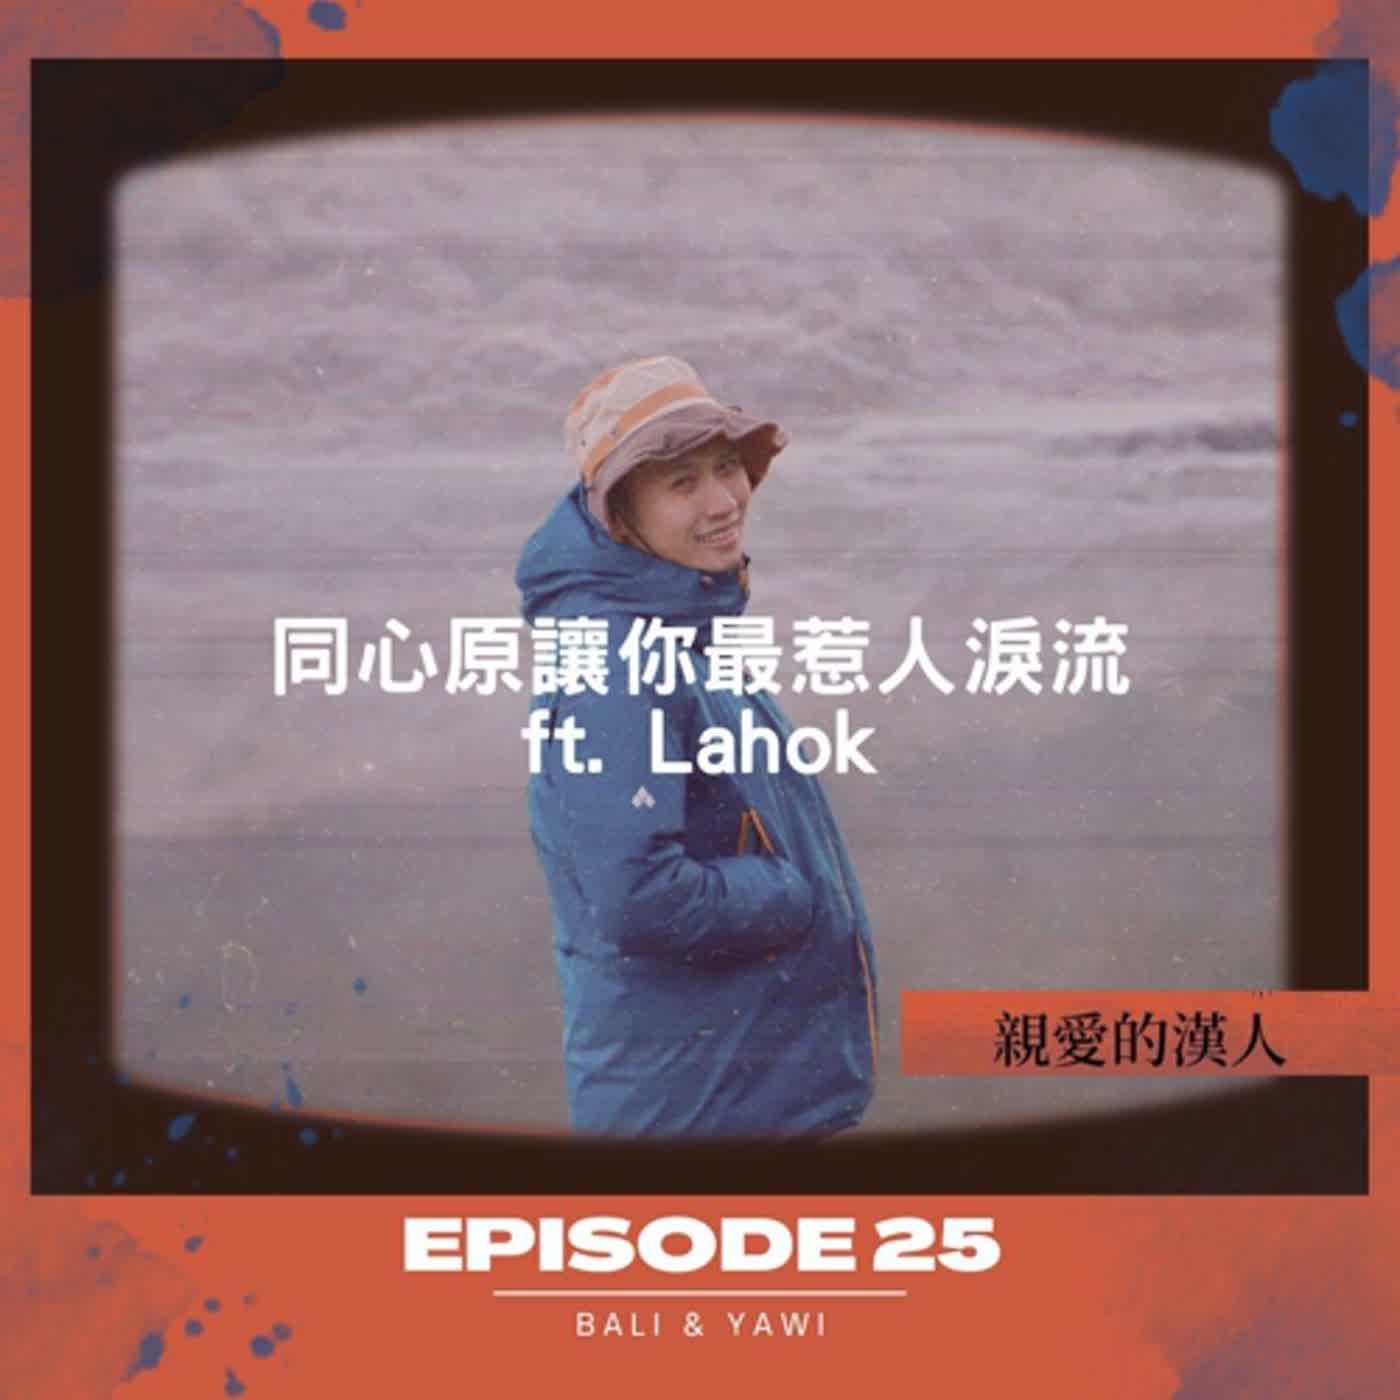 Episode 25：「同」心「原」讓你最惹人 淚流 ft. Lahok